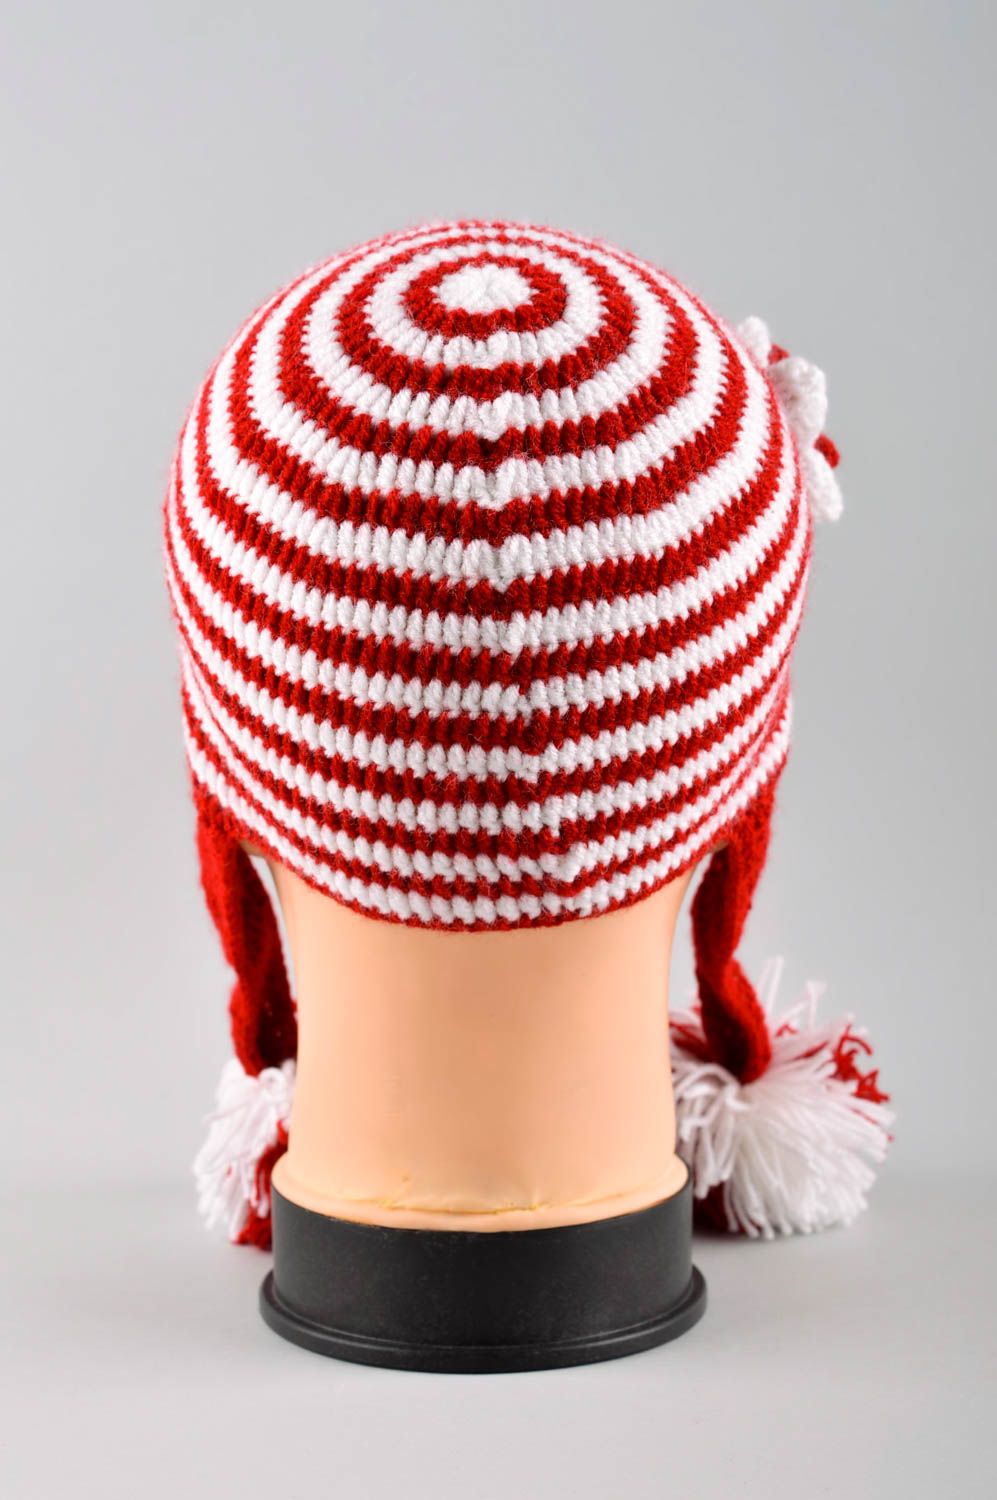 Handmade hat designer cap unusual warm hat cap for children gift ideas photo 4